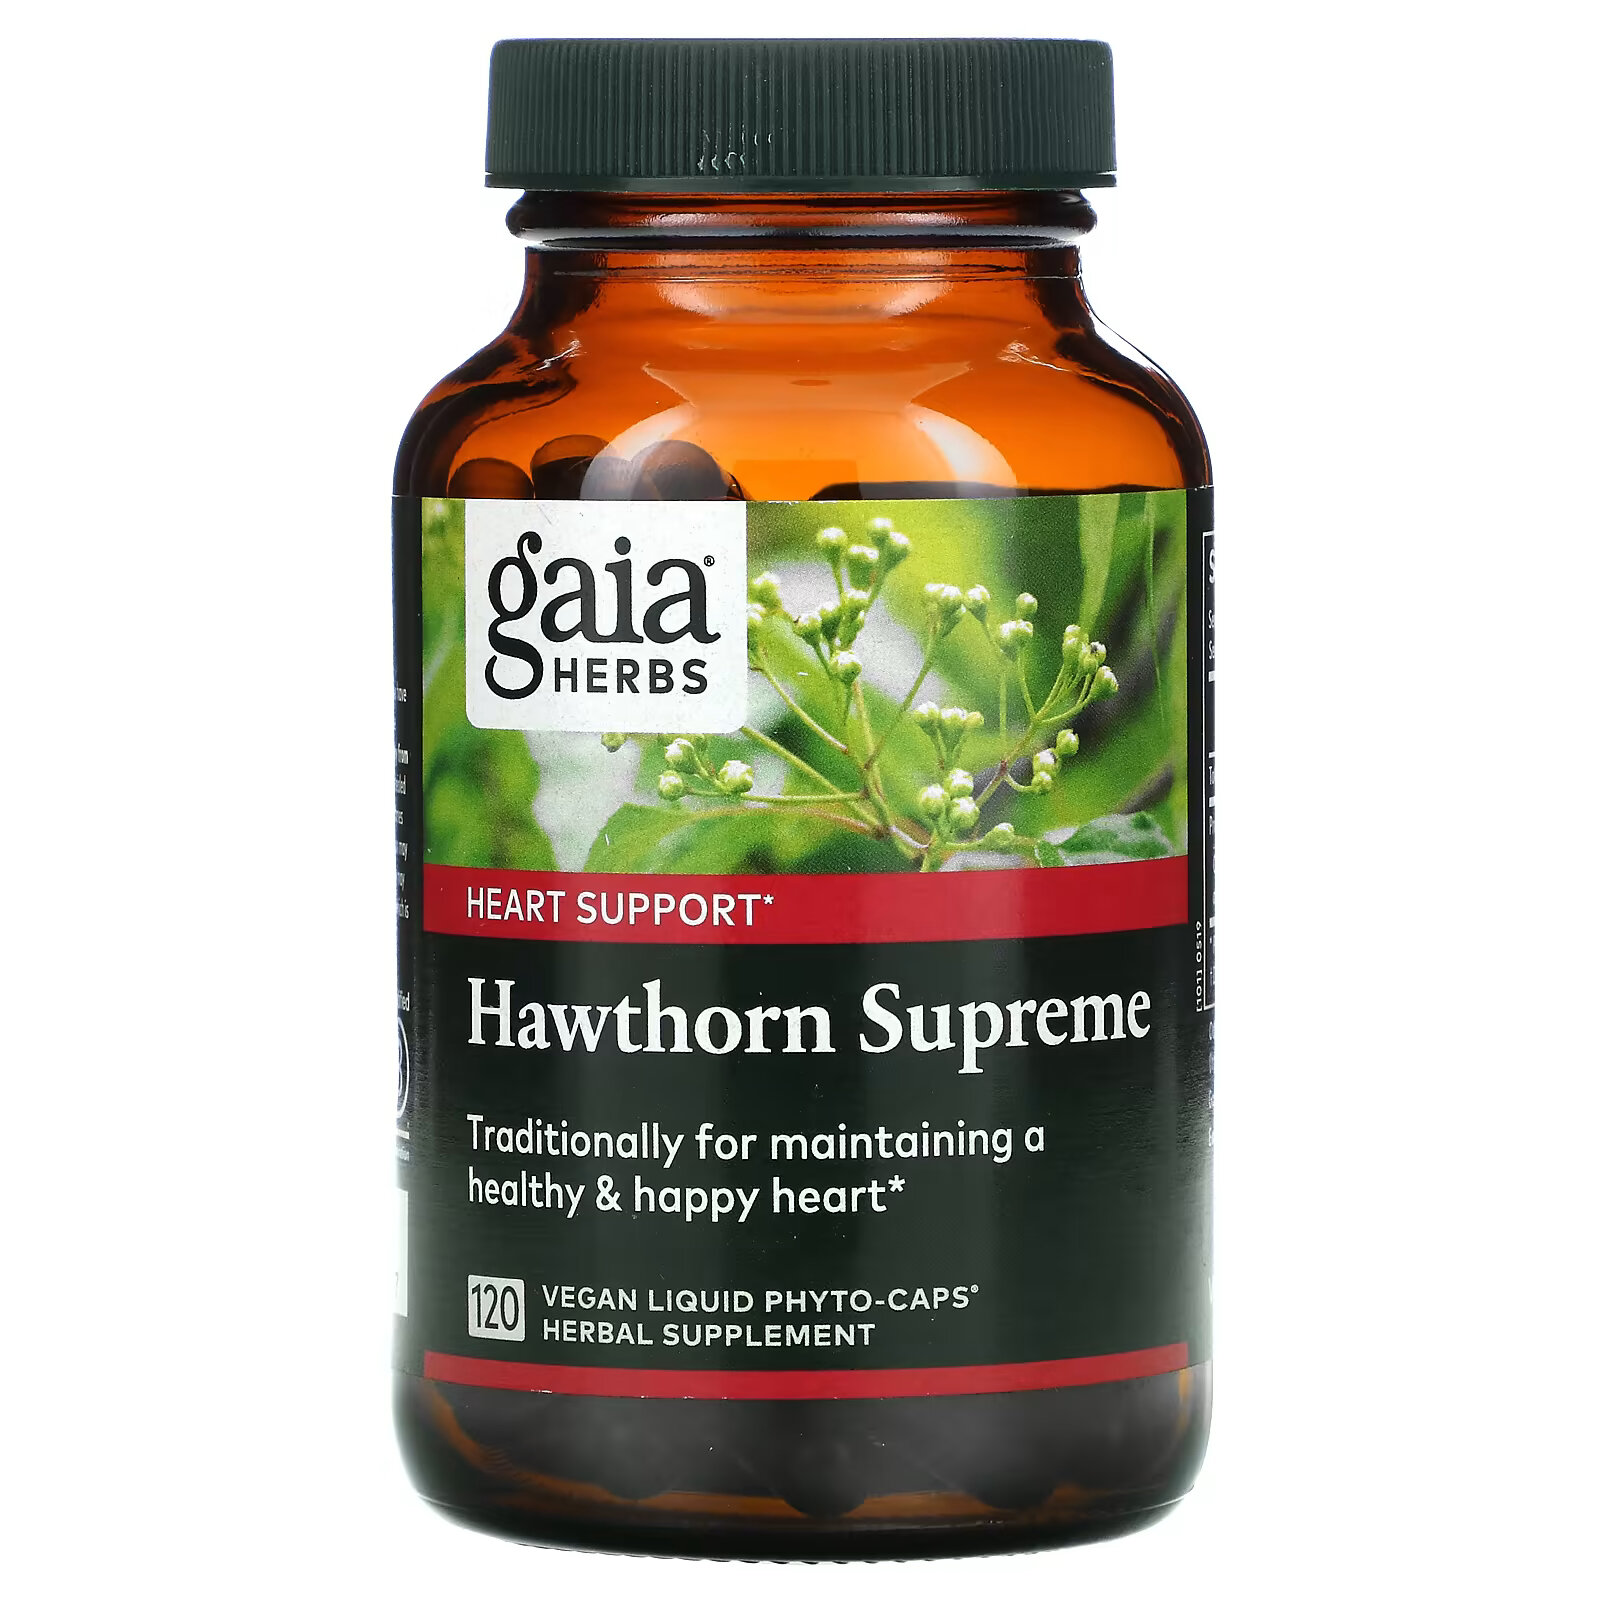 цена Gaia Herbs, Hawthorn Supreme, 120 веганских жидких фитокапсул